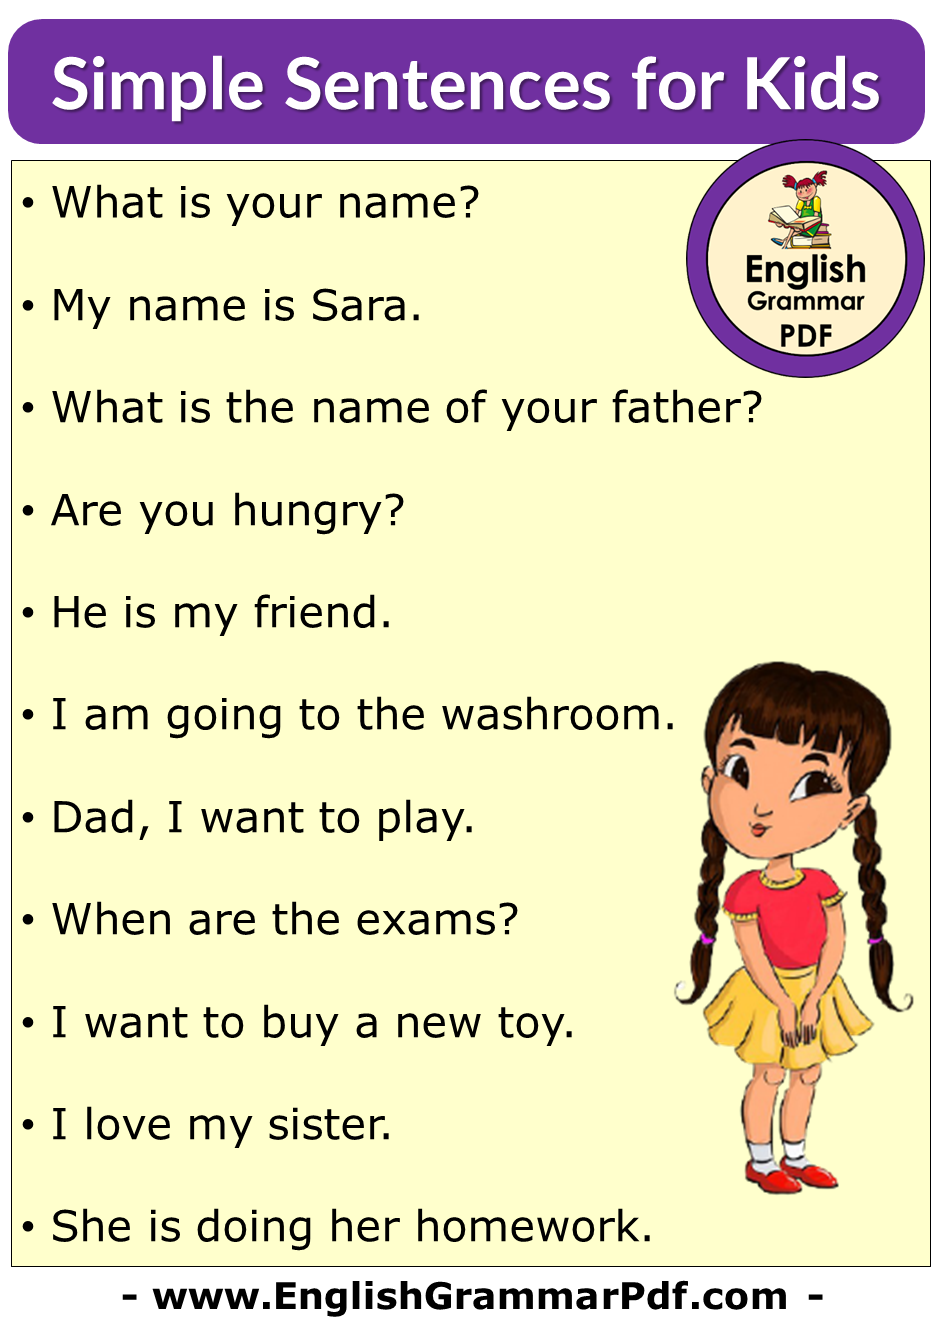 10 simple sentences for kids